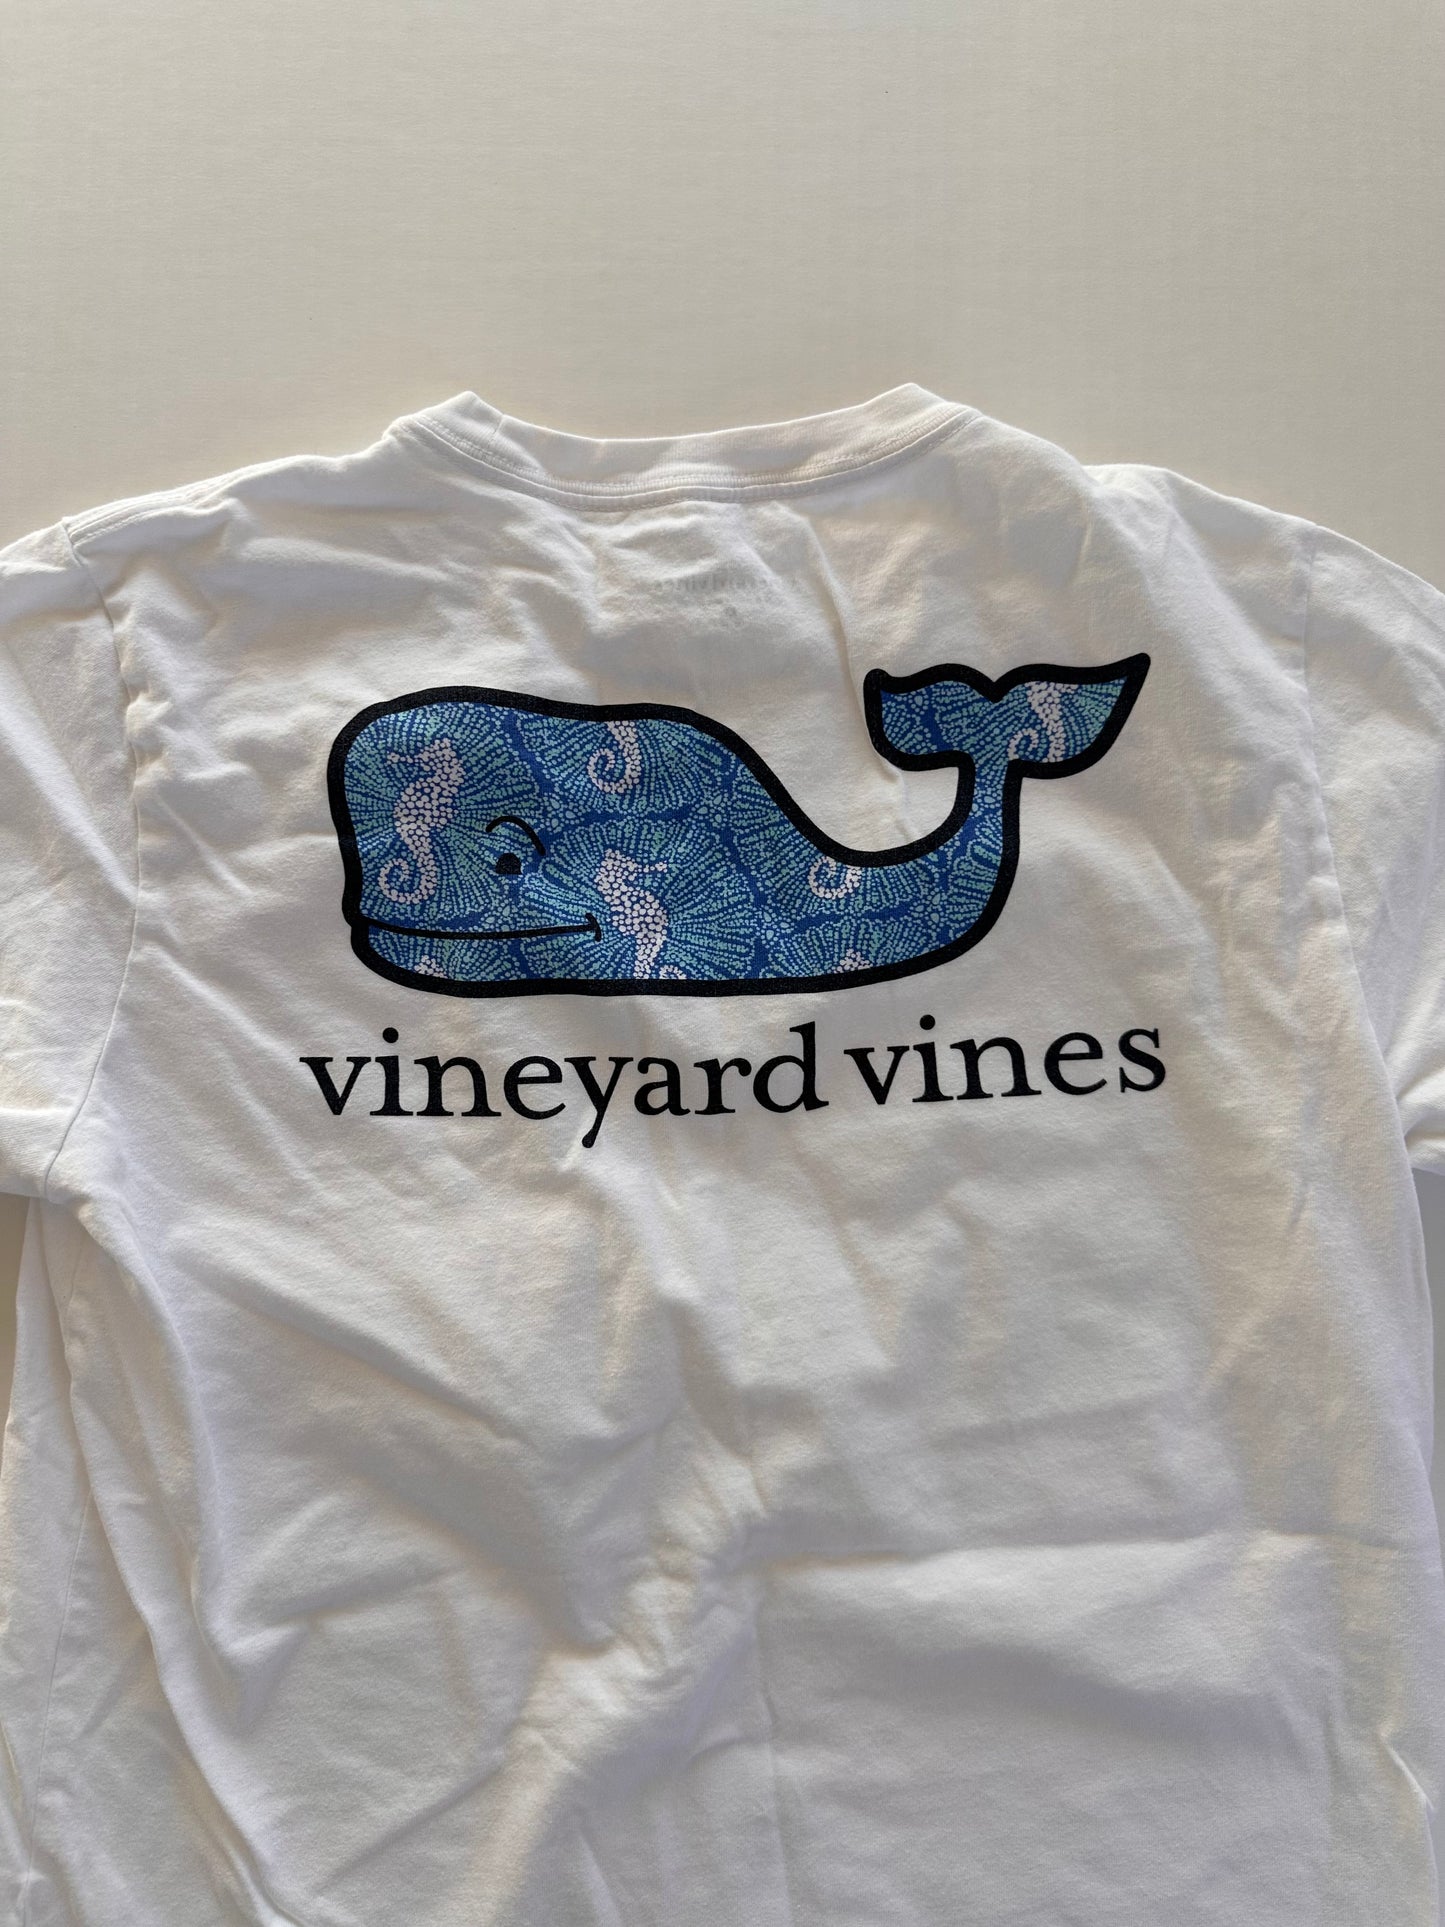 Vineyard Vines Boys Medium 10-12 T shirt, cotton